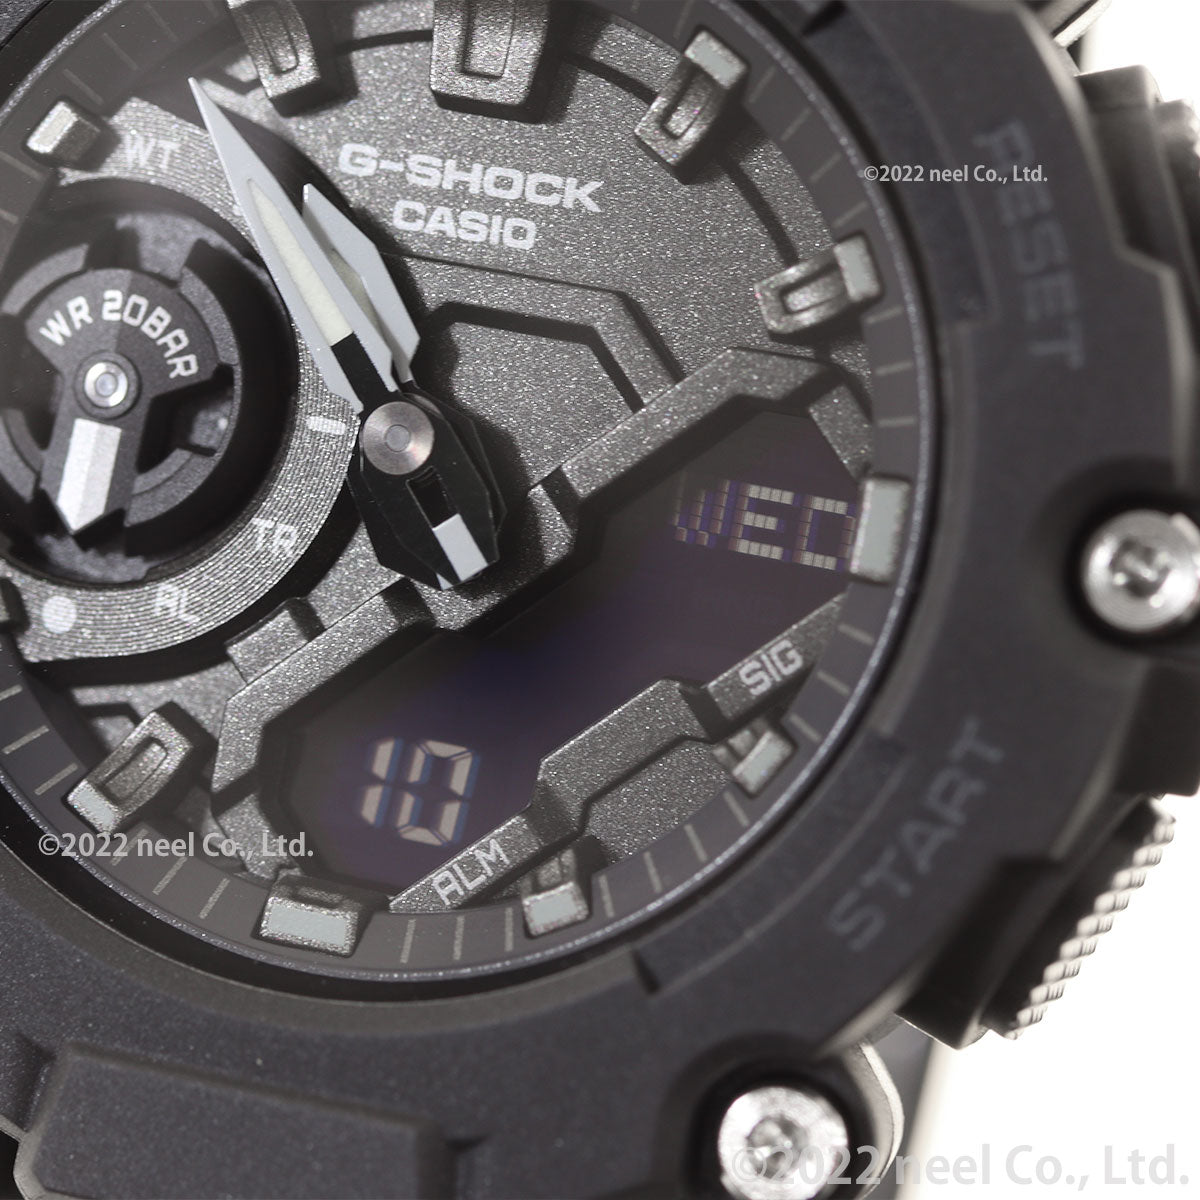 G-SHOCK カシオ Gショック 腕時計 メンズ レディース GMA-S2200-1AJF GA-2200 小型化・薄型化モデル